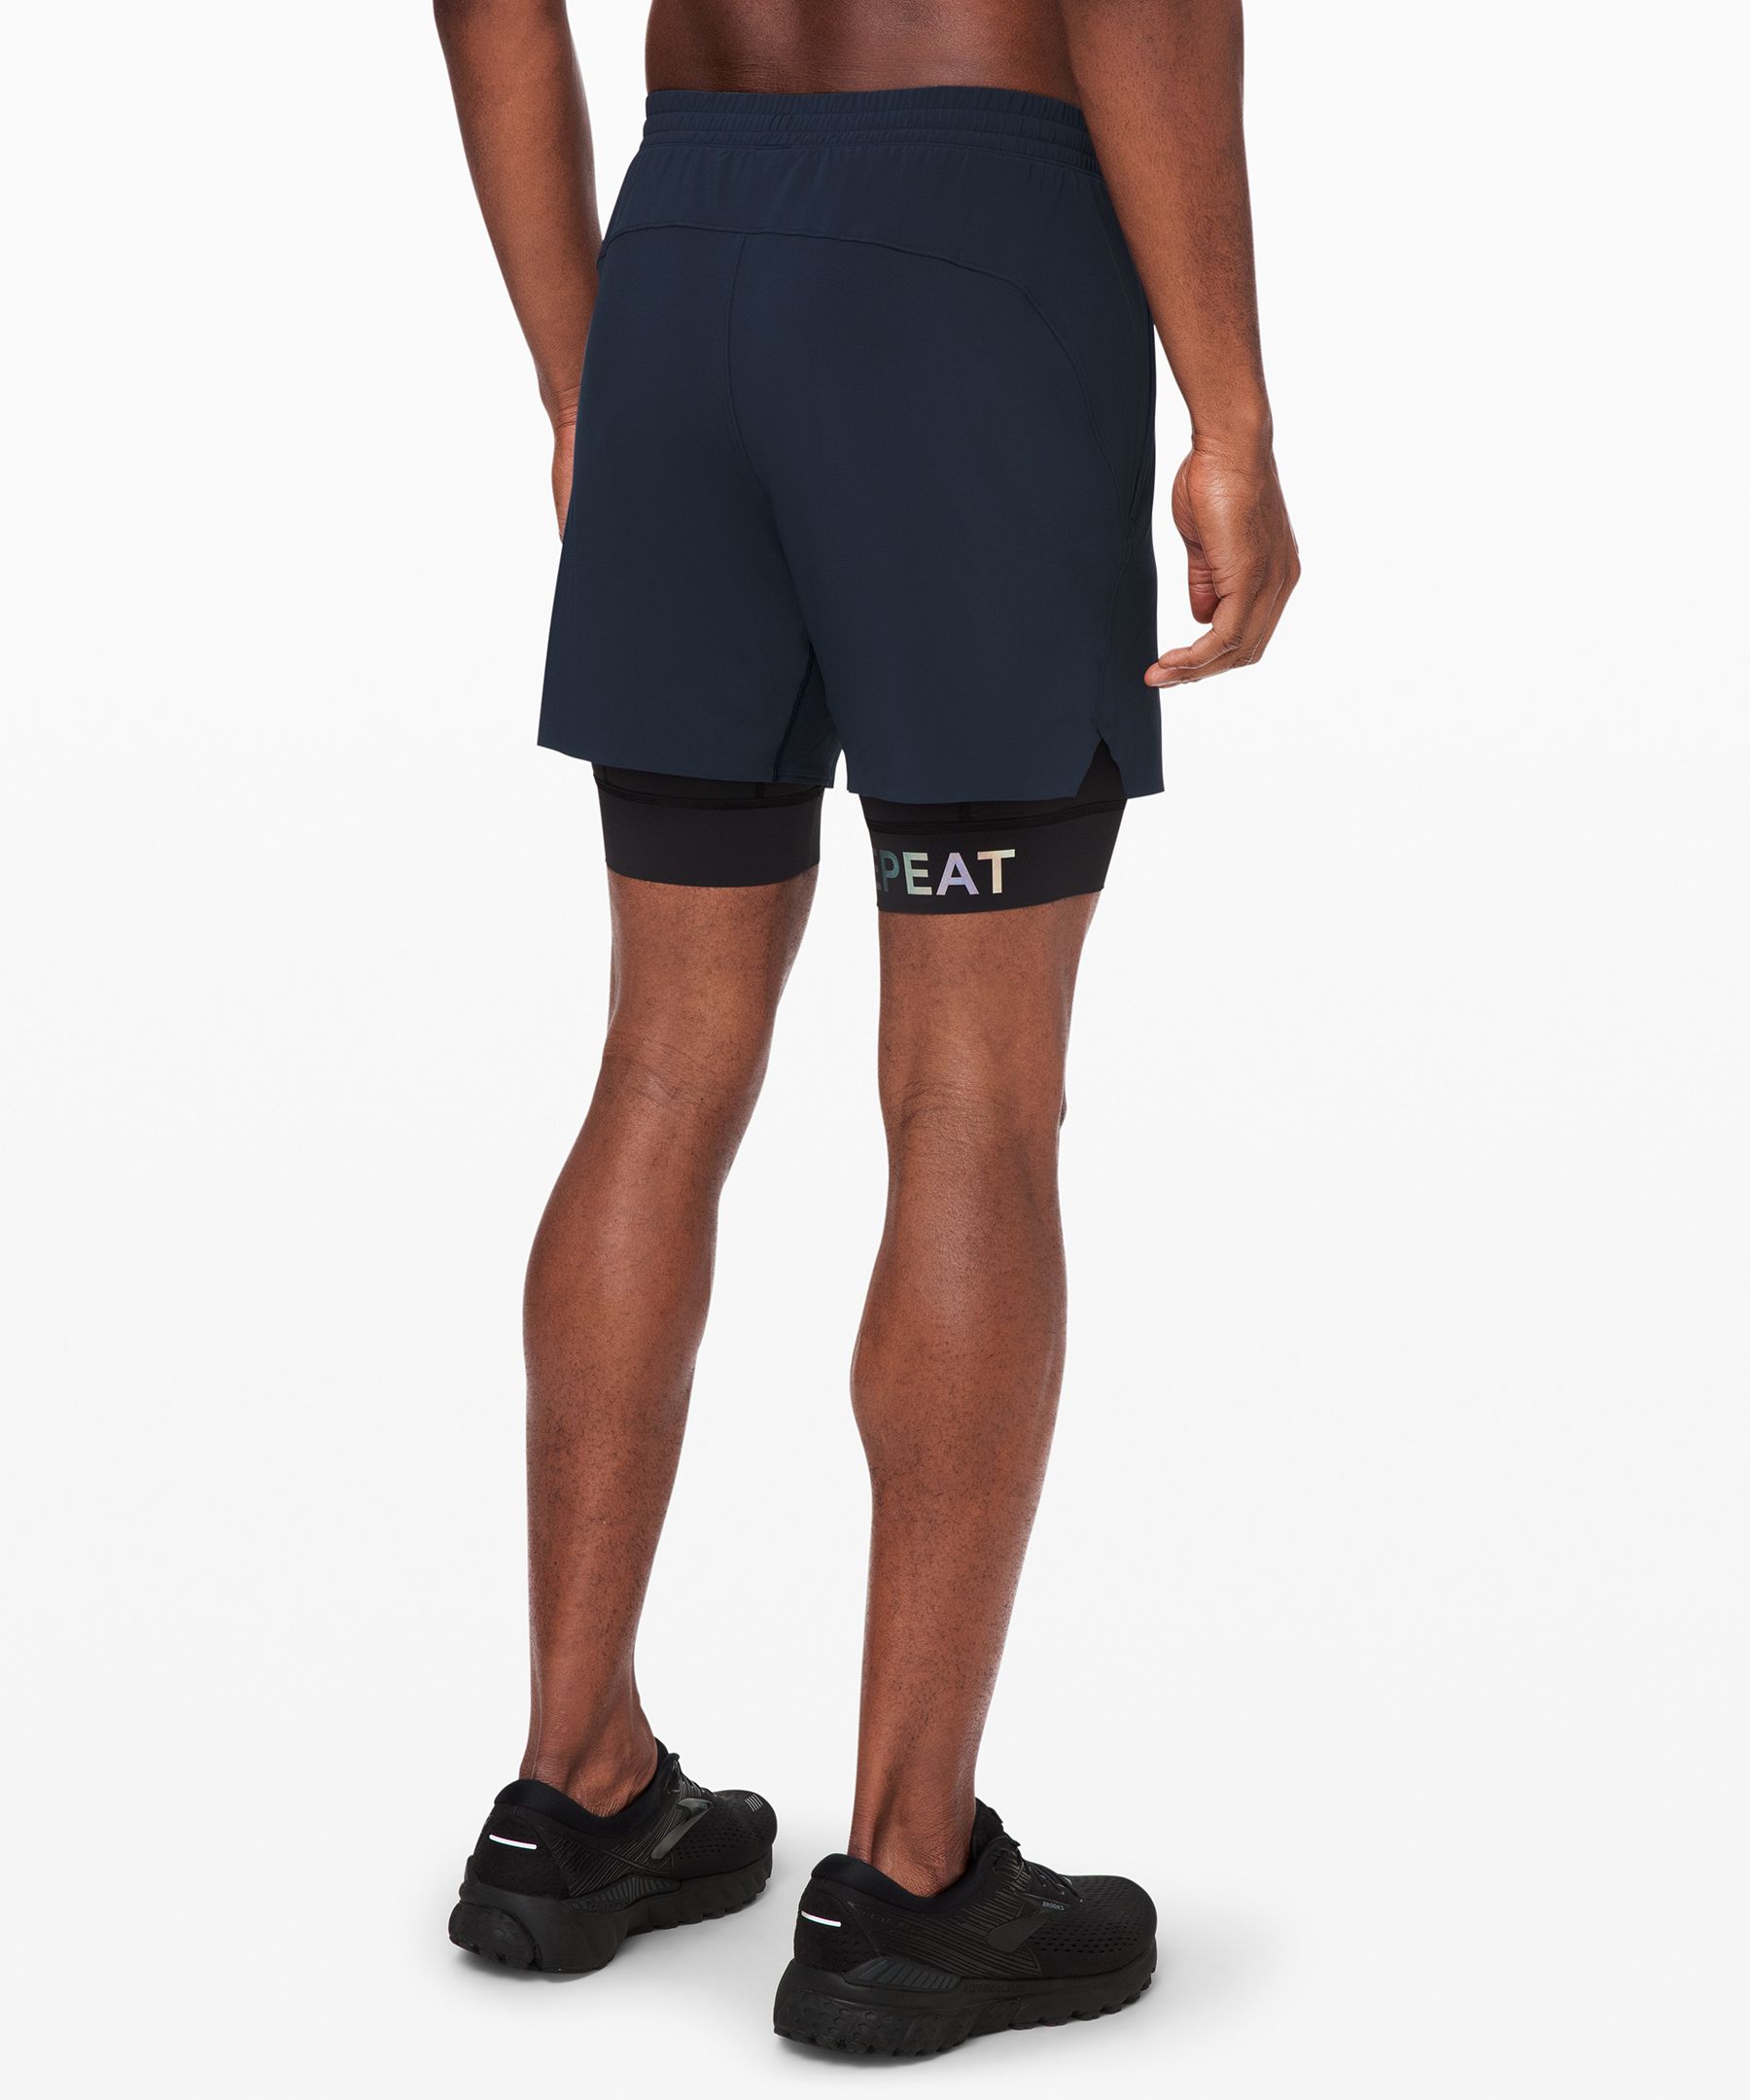 lululemon liner shorts